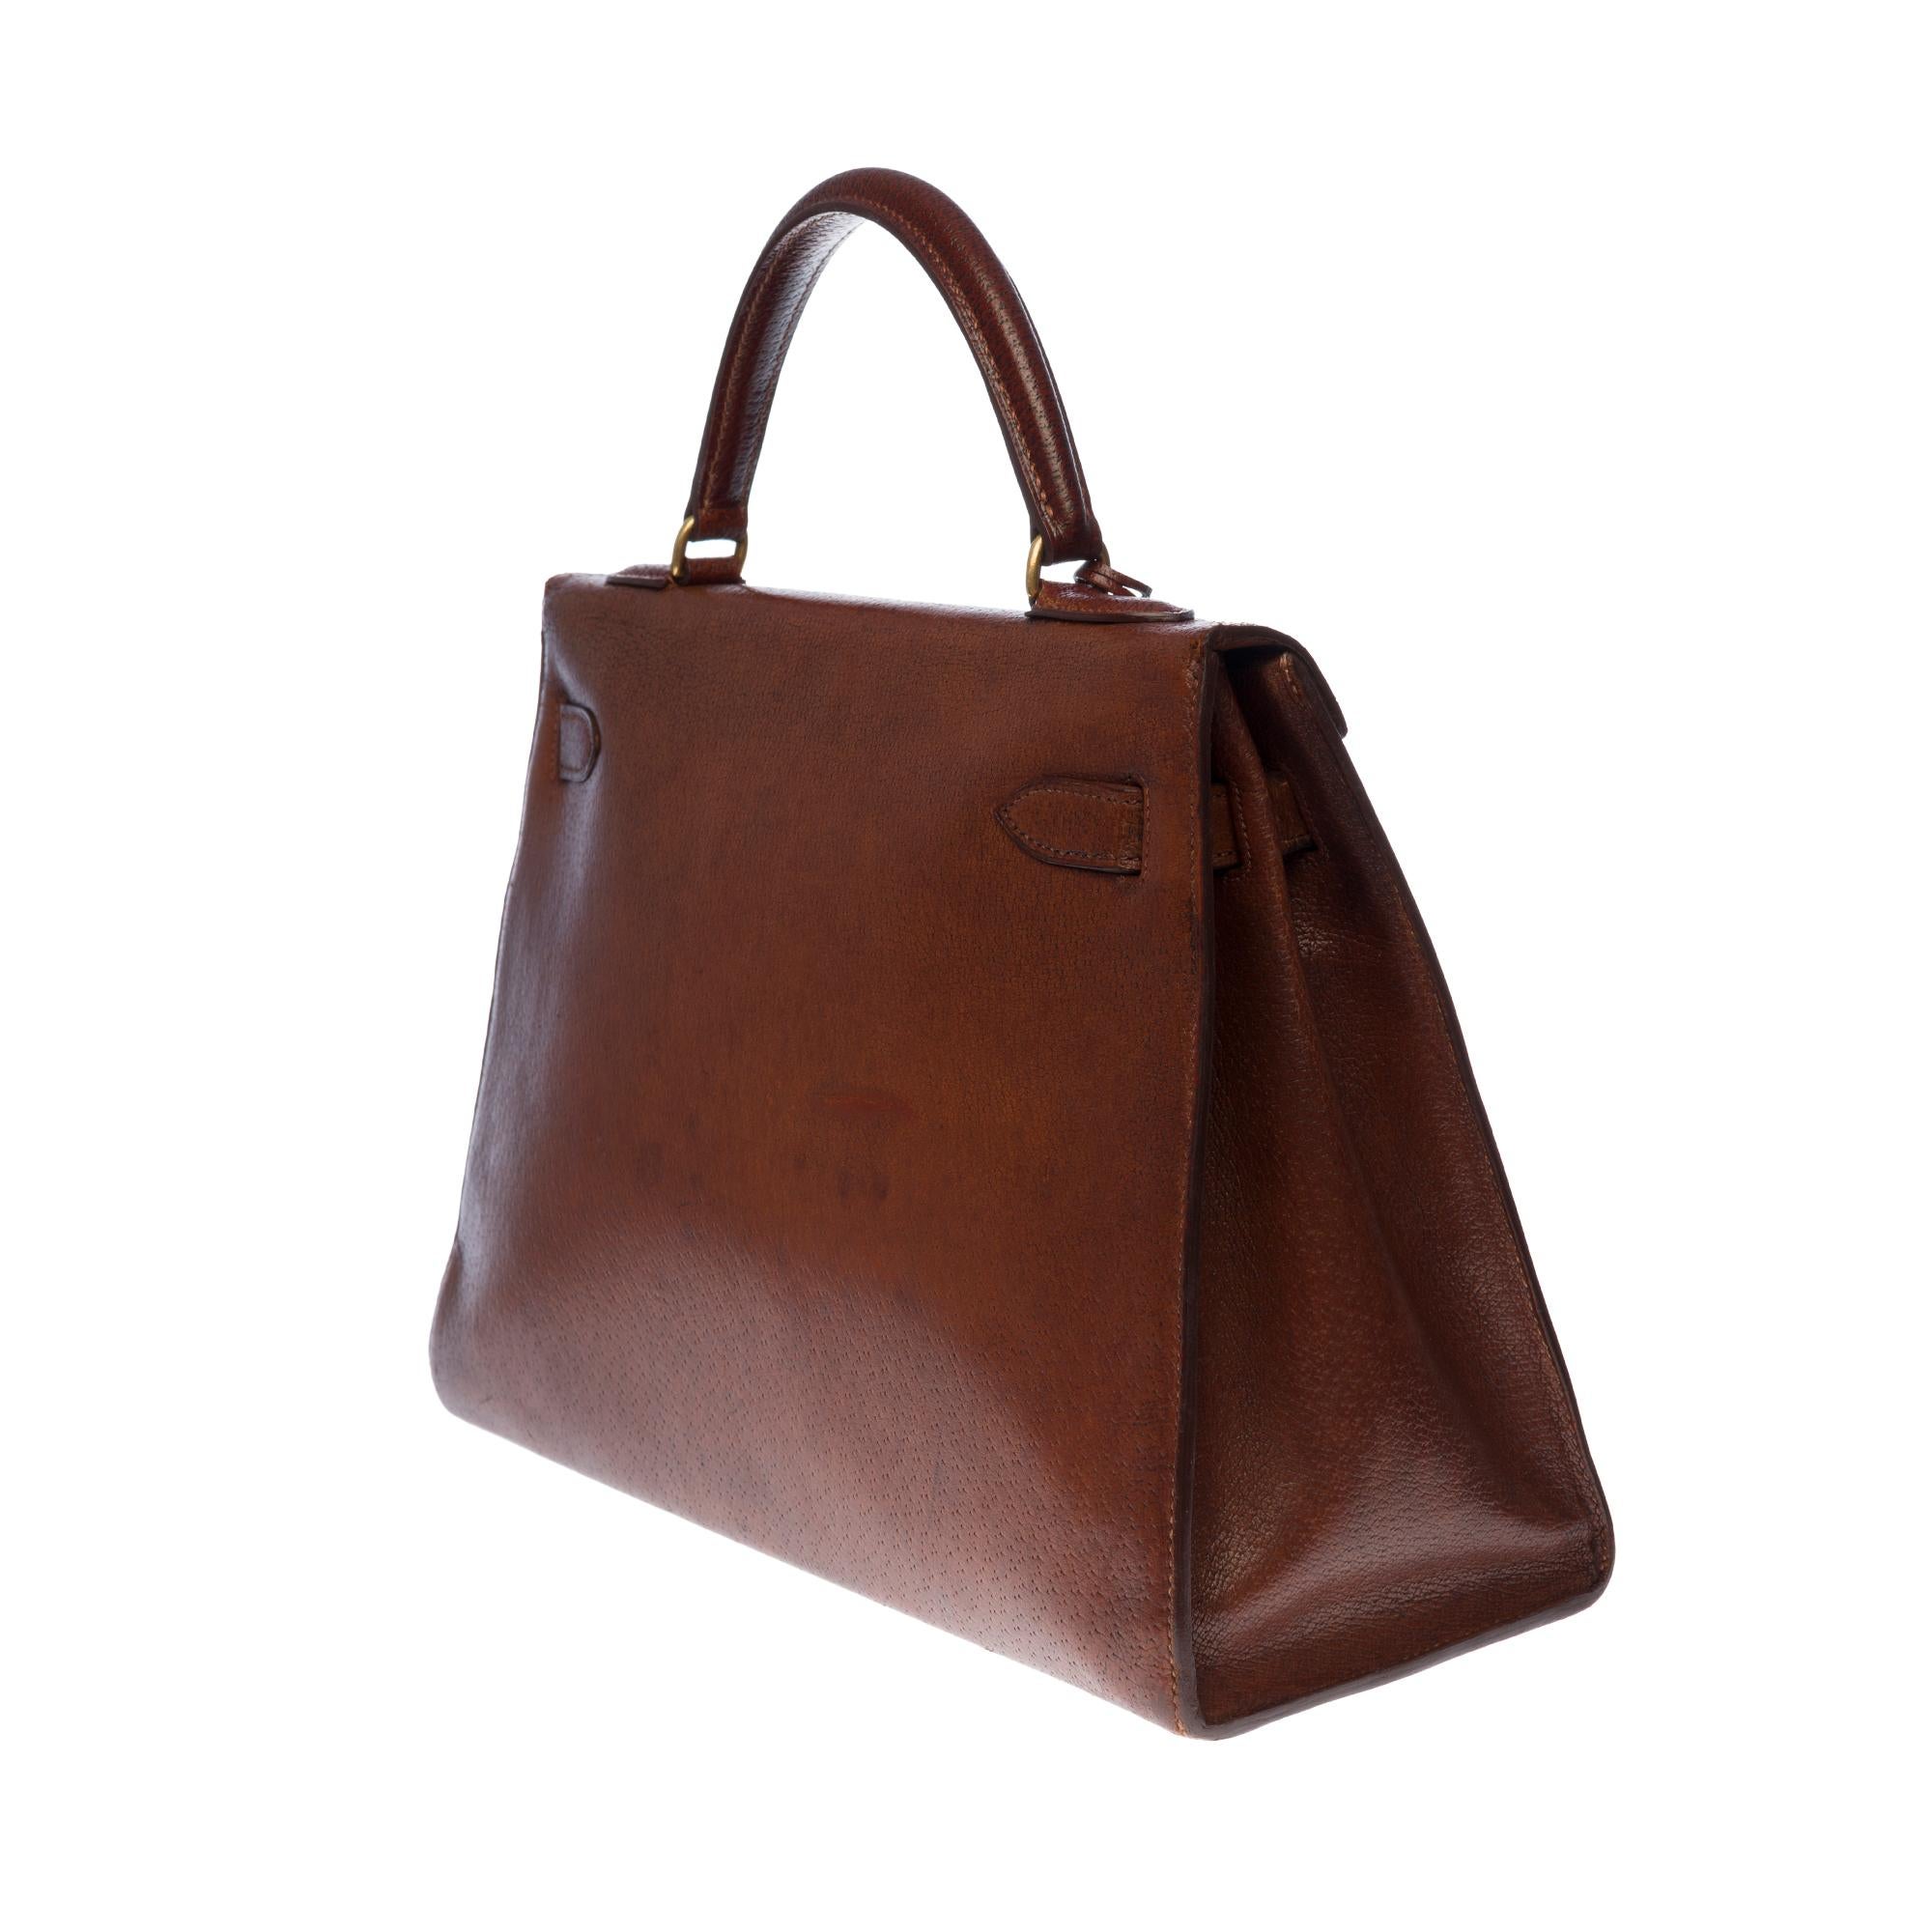 Women's Hermès Kelly 32 handbag with strap in Brown Pecari leather, GHW